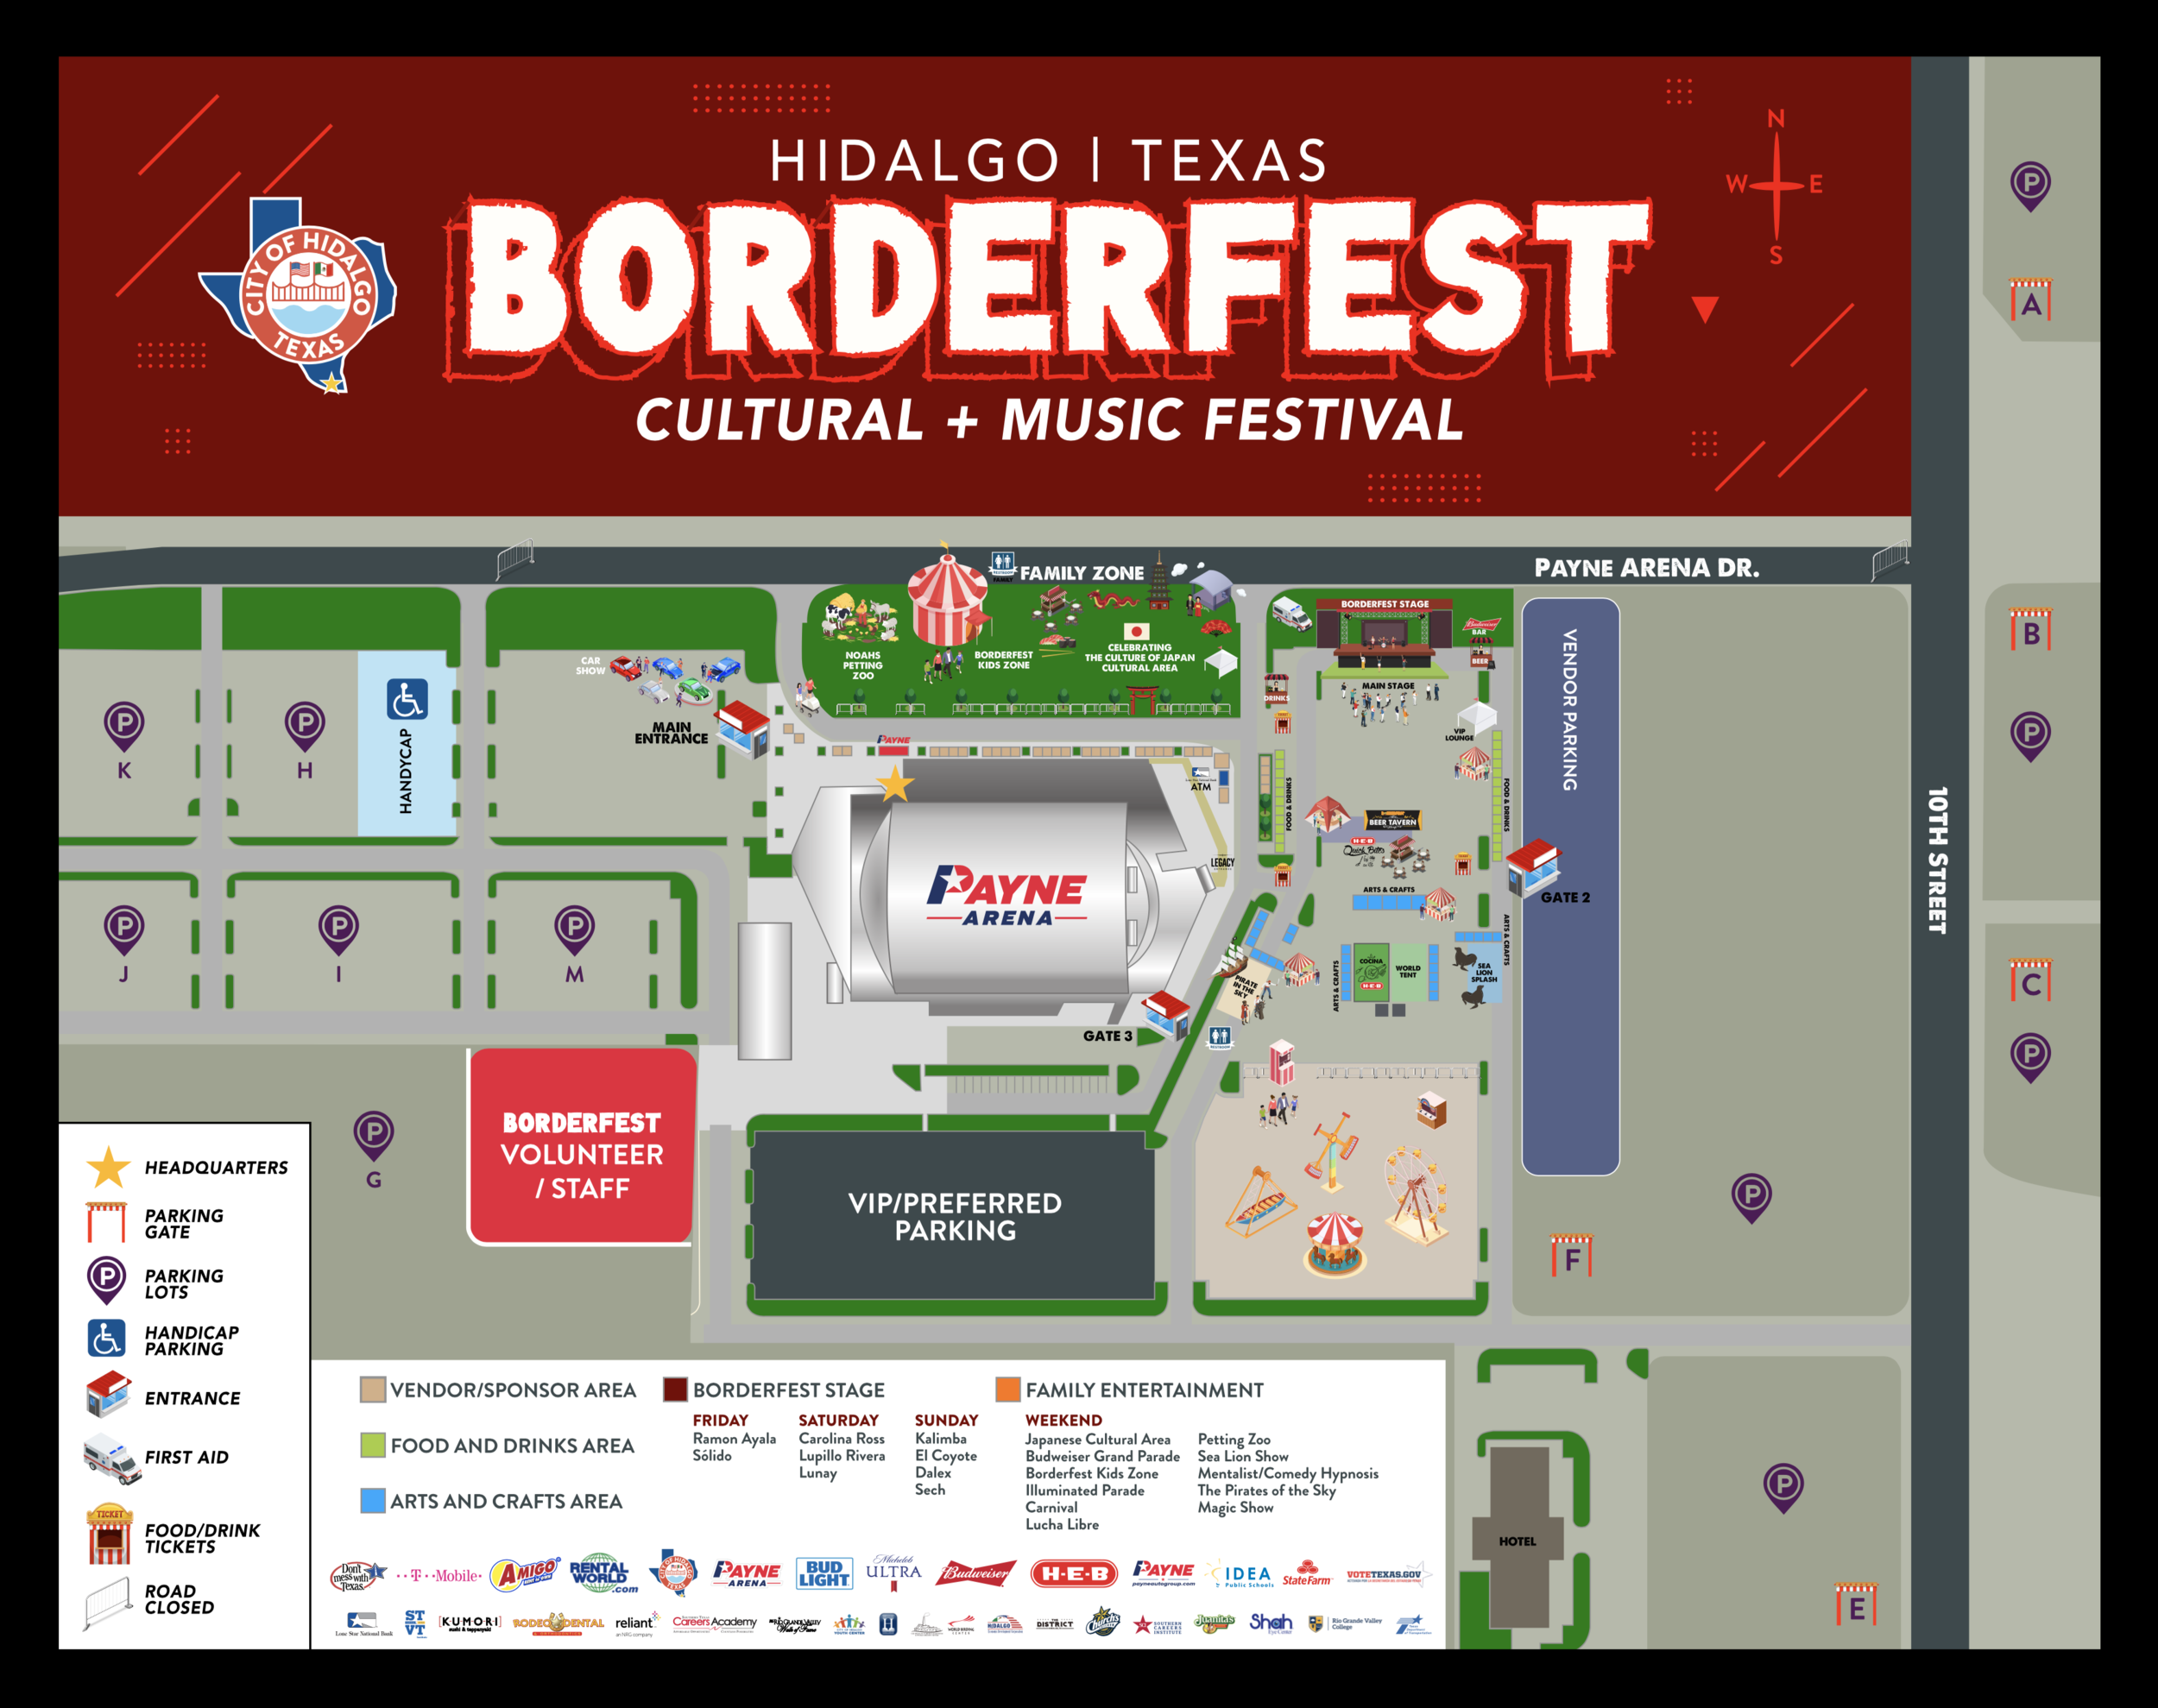 HIDALGO BORDER FEST 2020